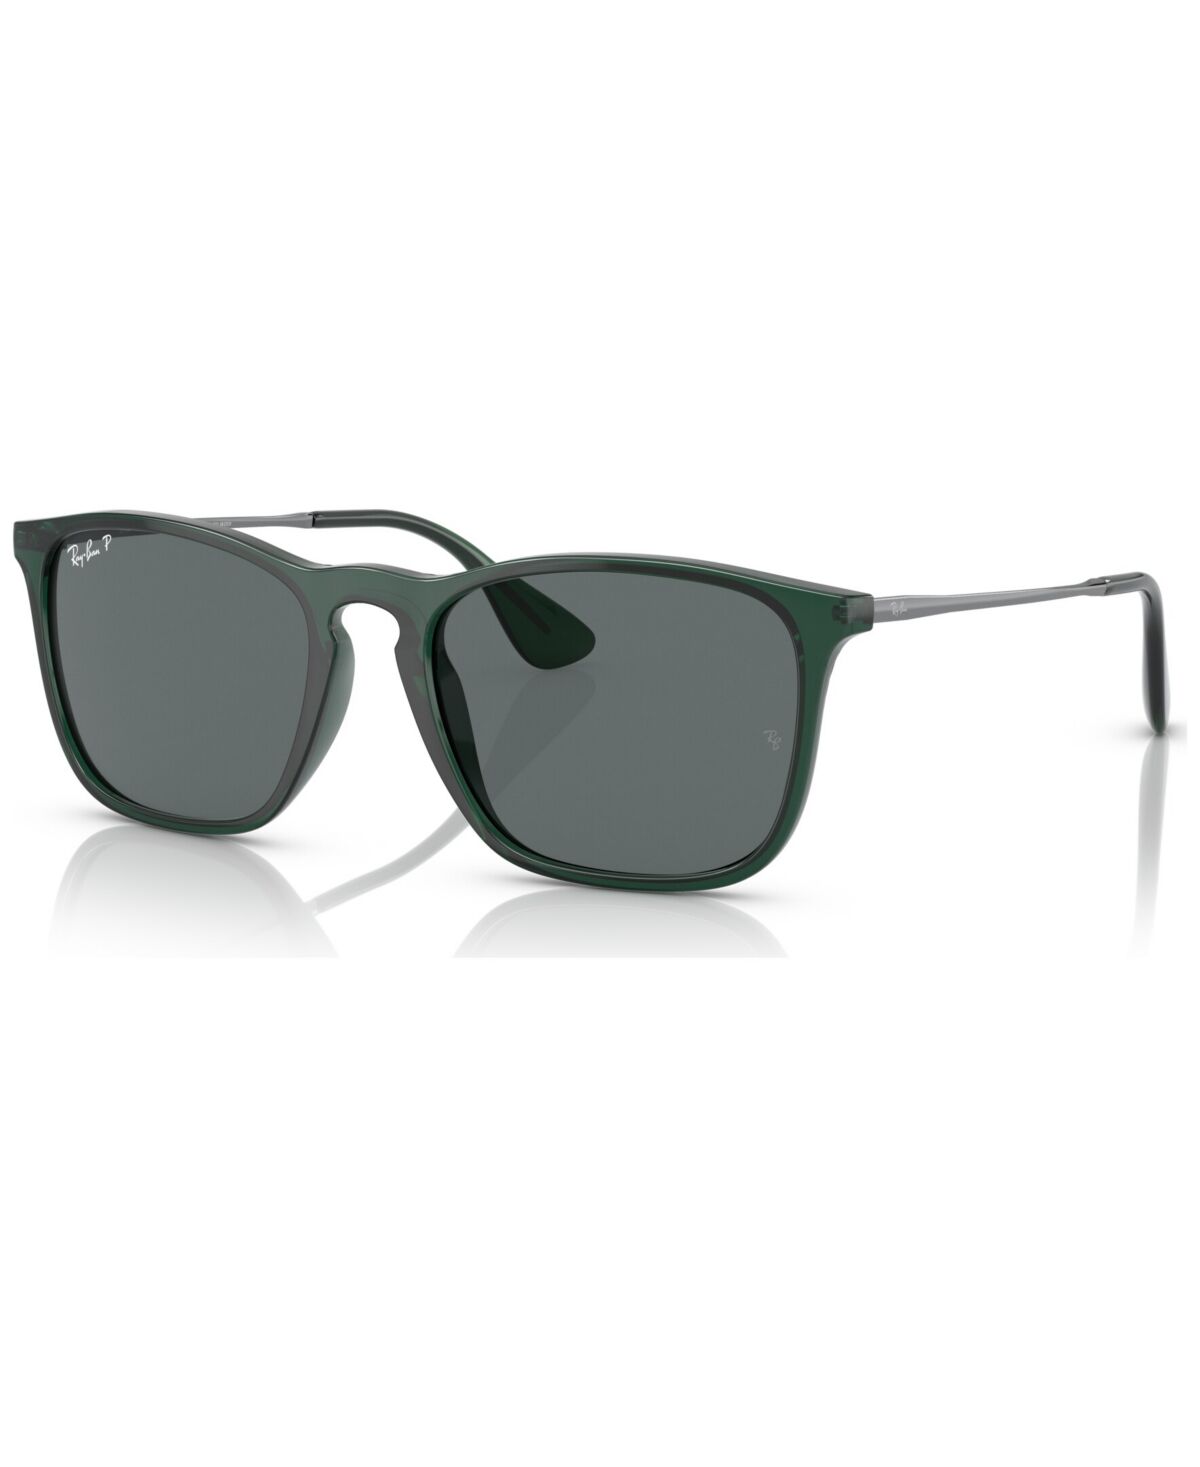 Ray-Ban Men's Polarized Sunglasses, RB4187 - Transparent Green